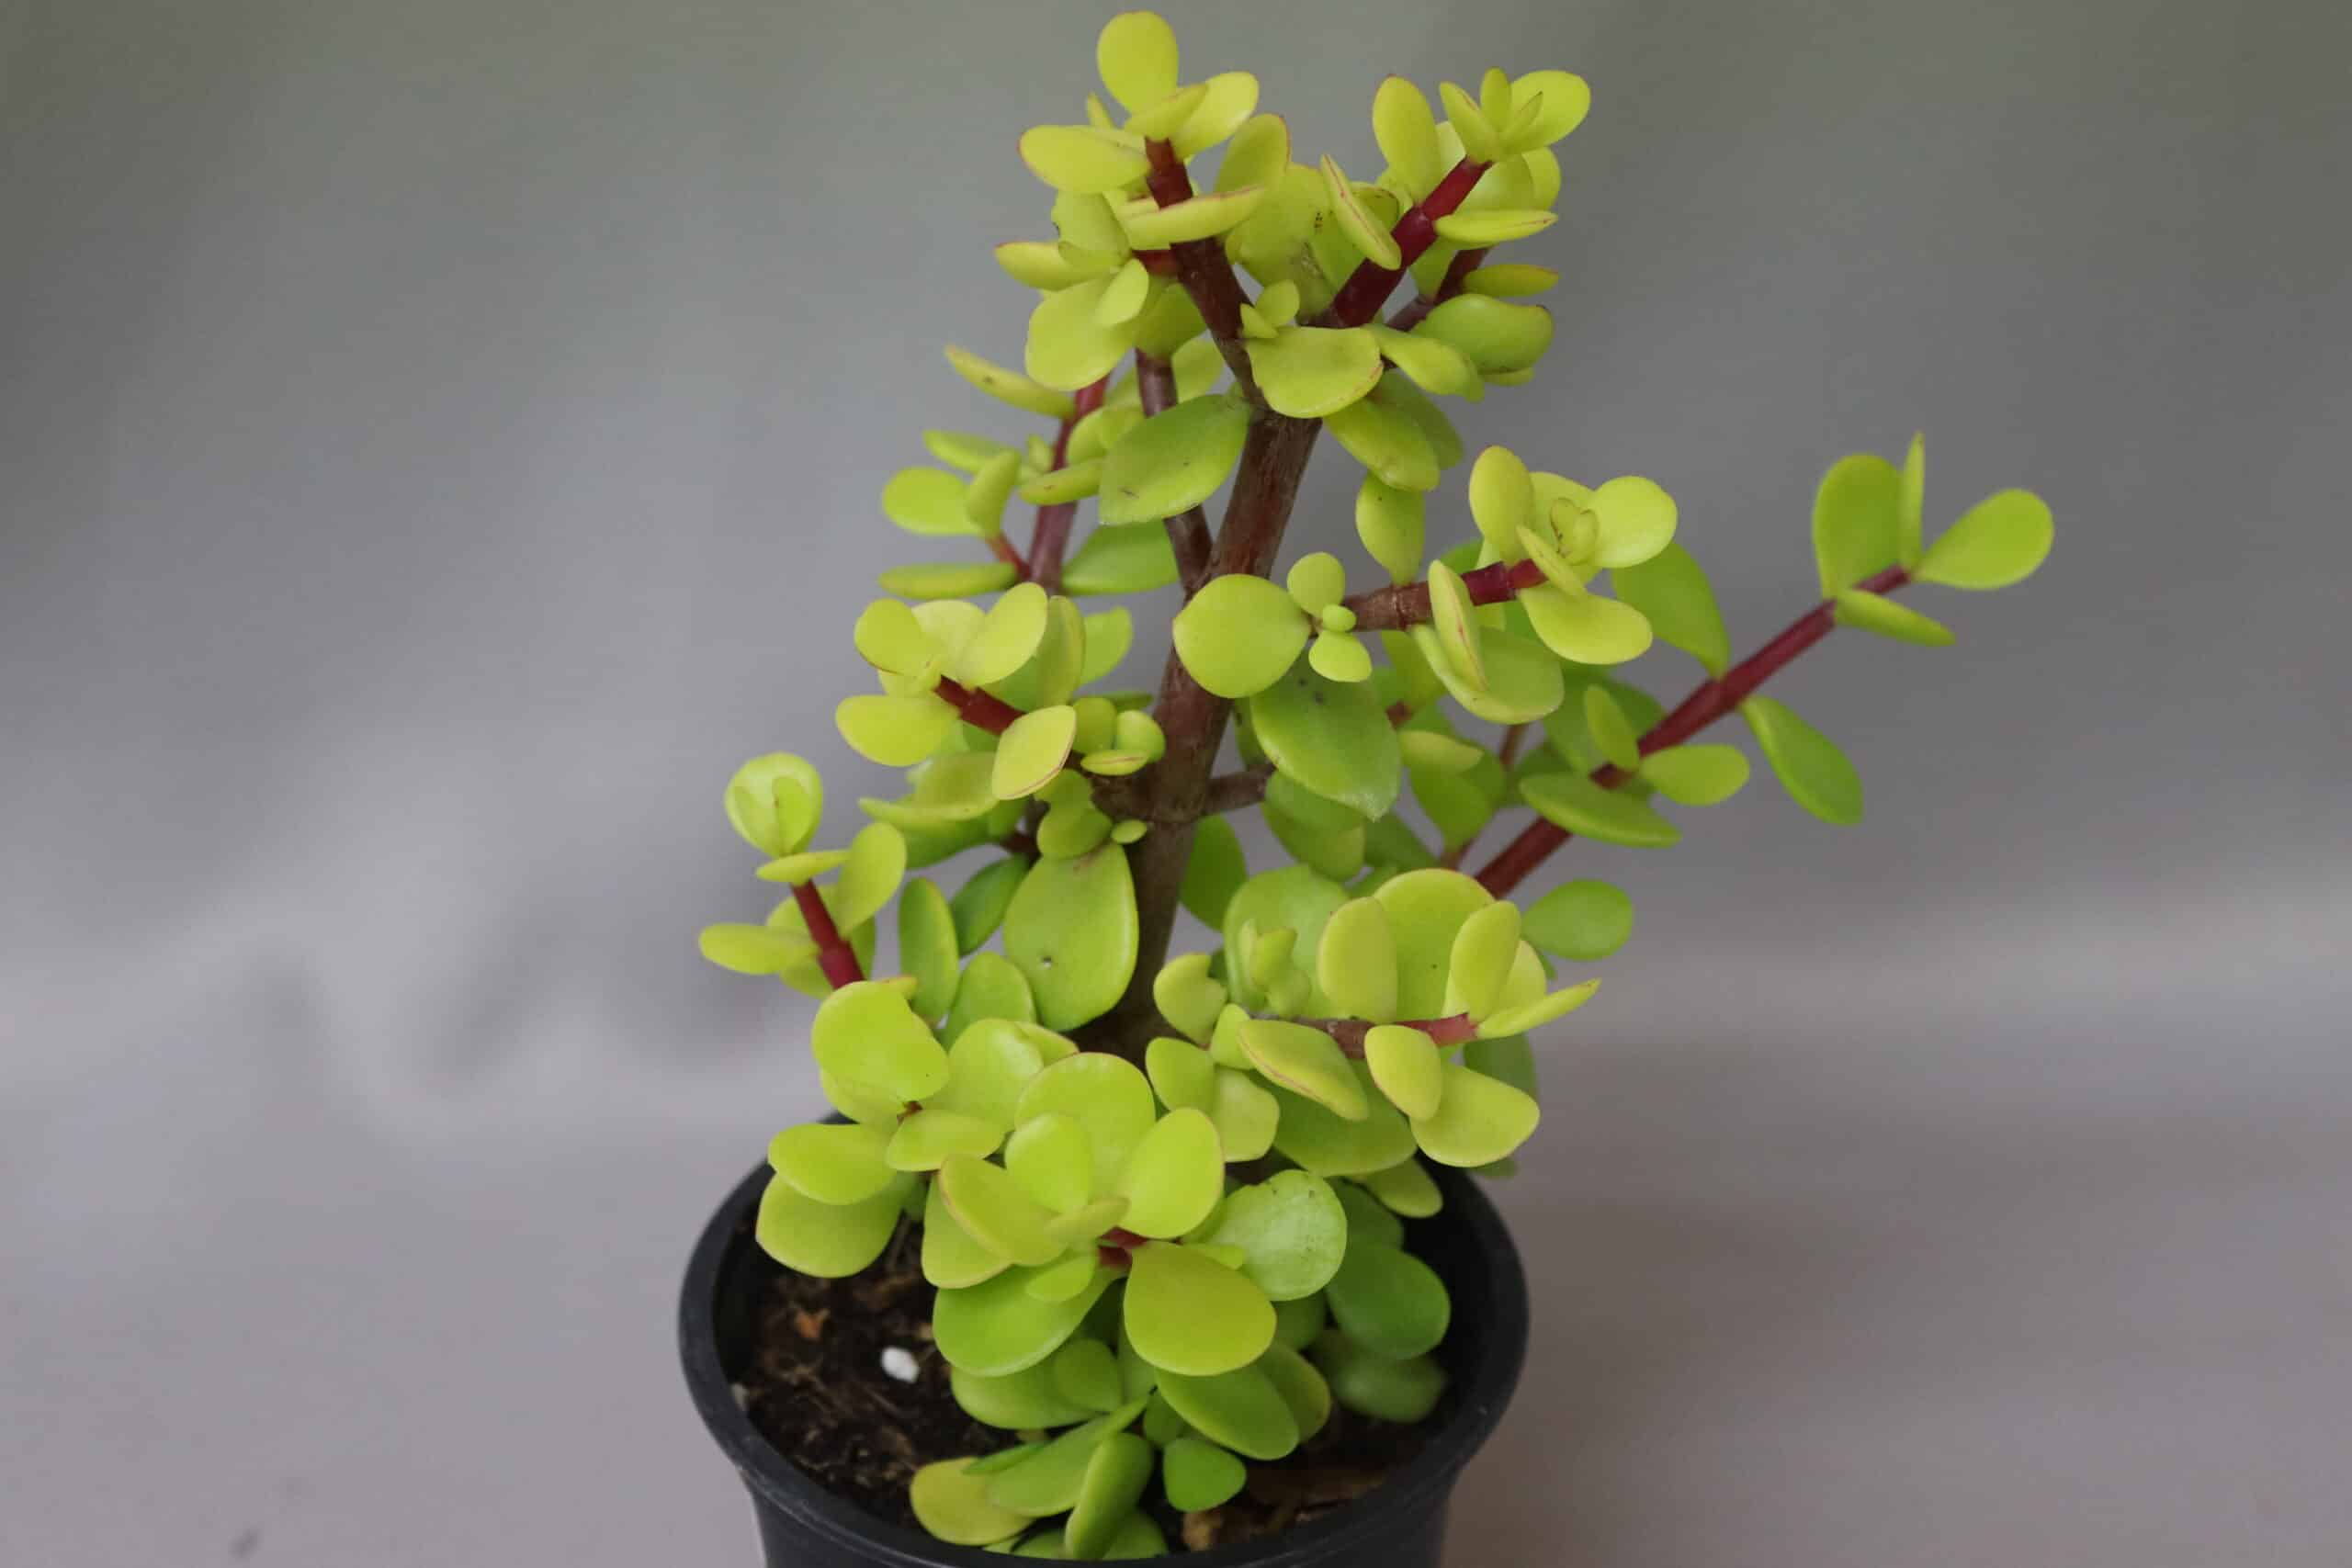 Portulacaria Afra spekboom plant. It has bright freen fleshy leaves on brown stalks.